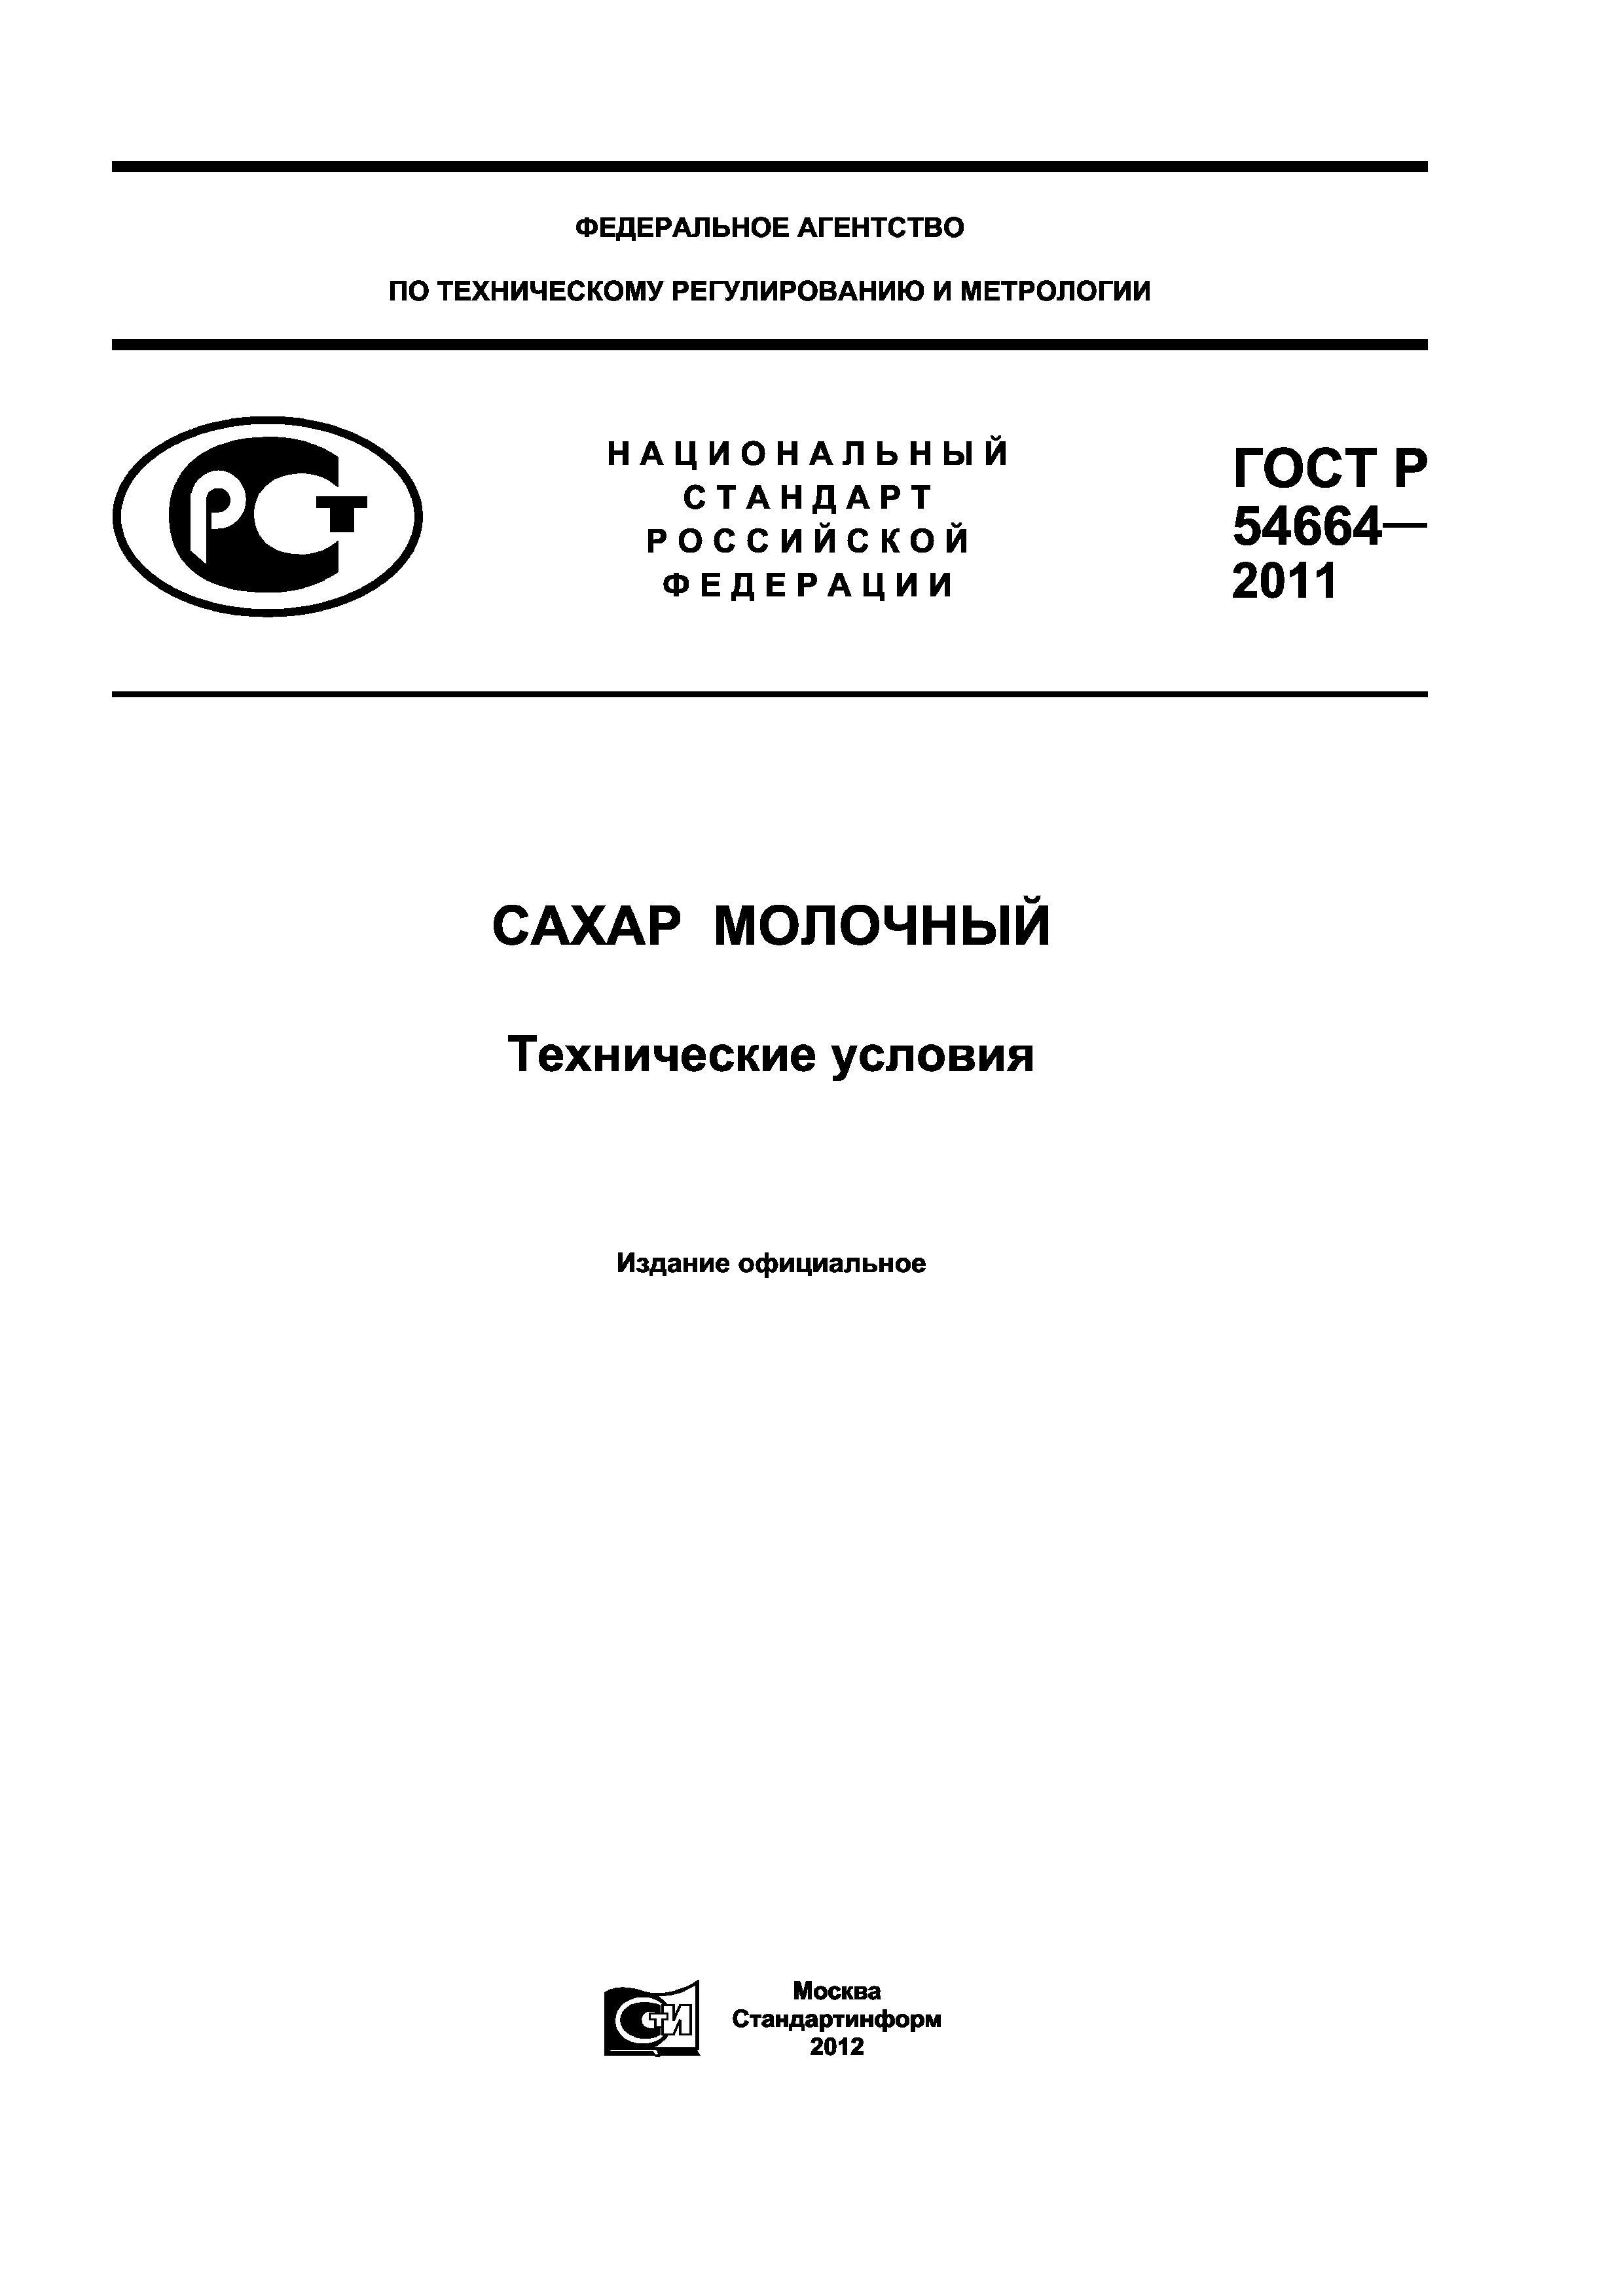 ГОСТ Р 54664-2011